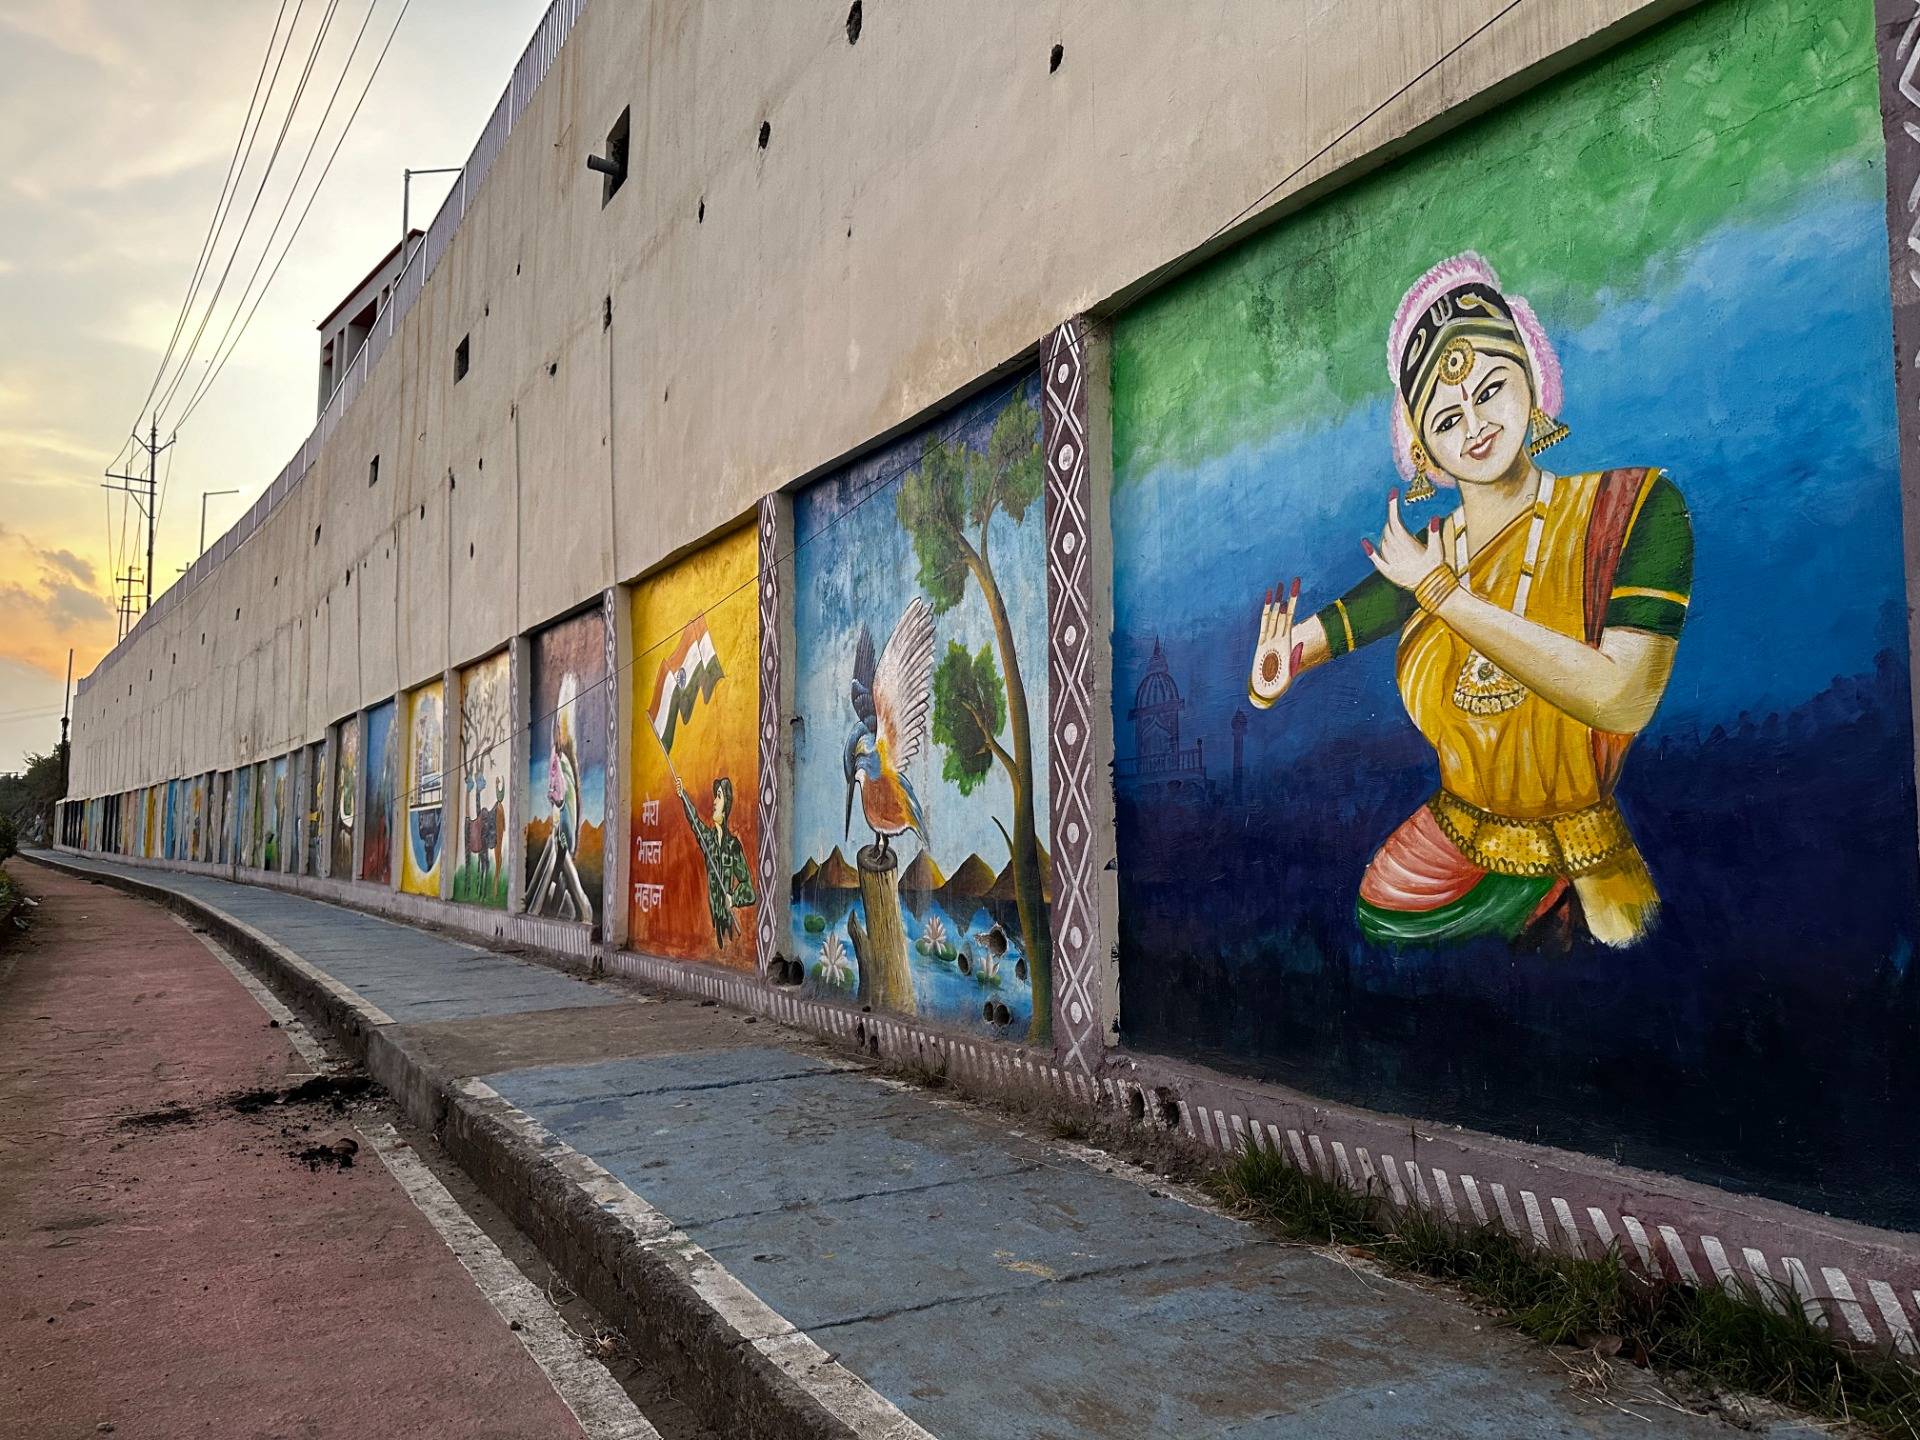 Mural Art in Bhopal